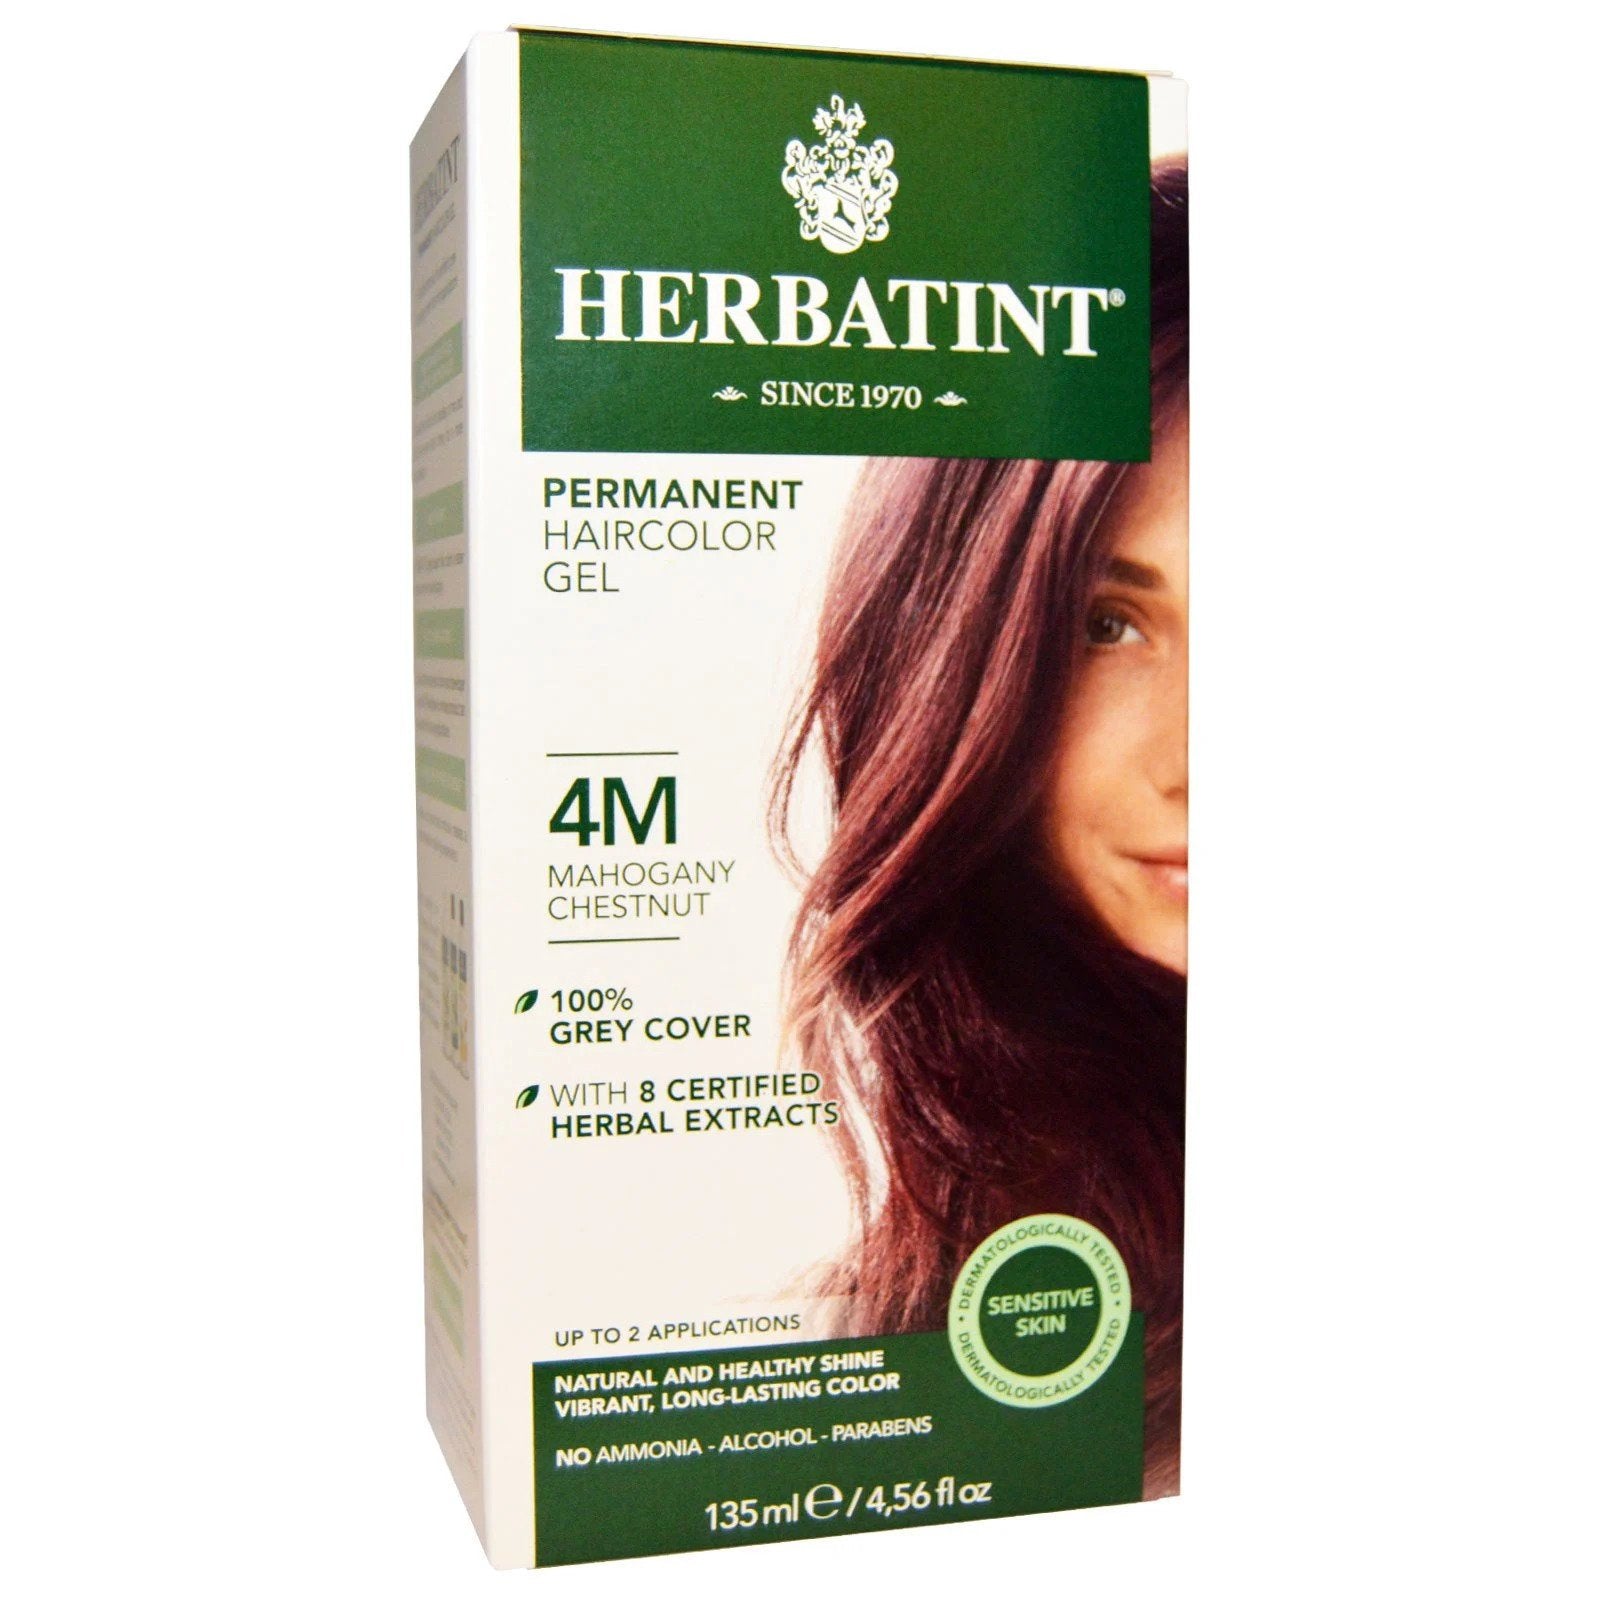 Herbatint - Permanent Haircolor Gel (4M - Mahogany Chestnut)